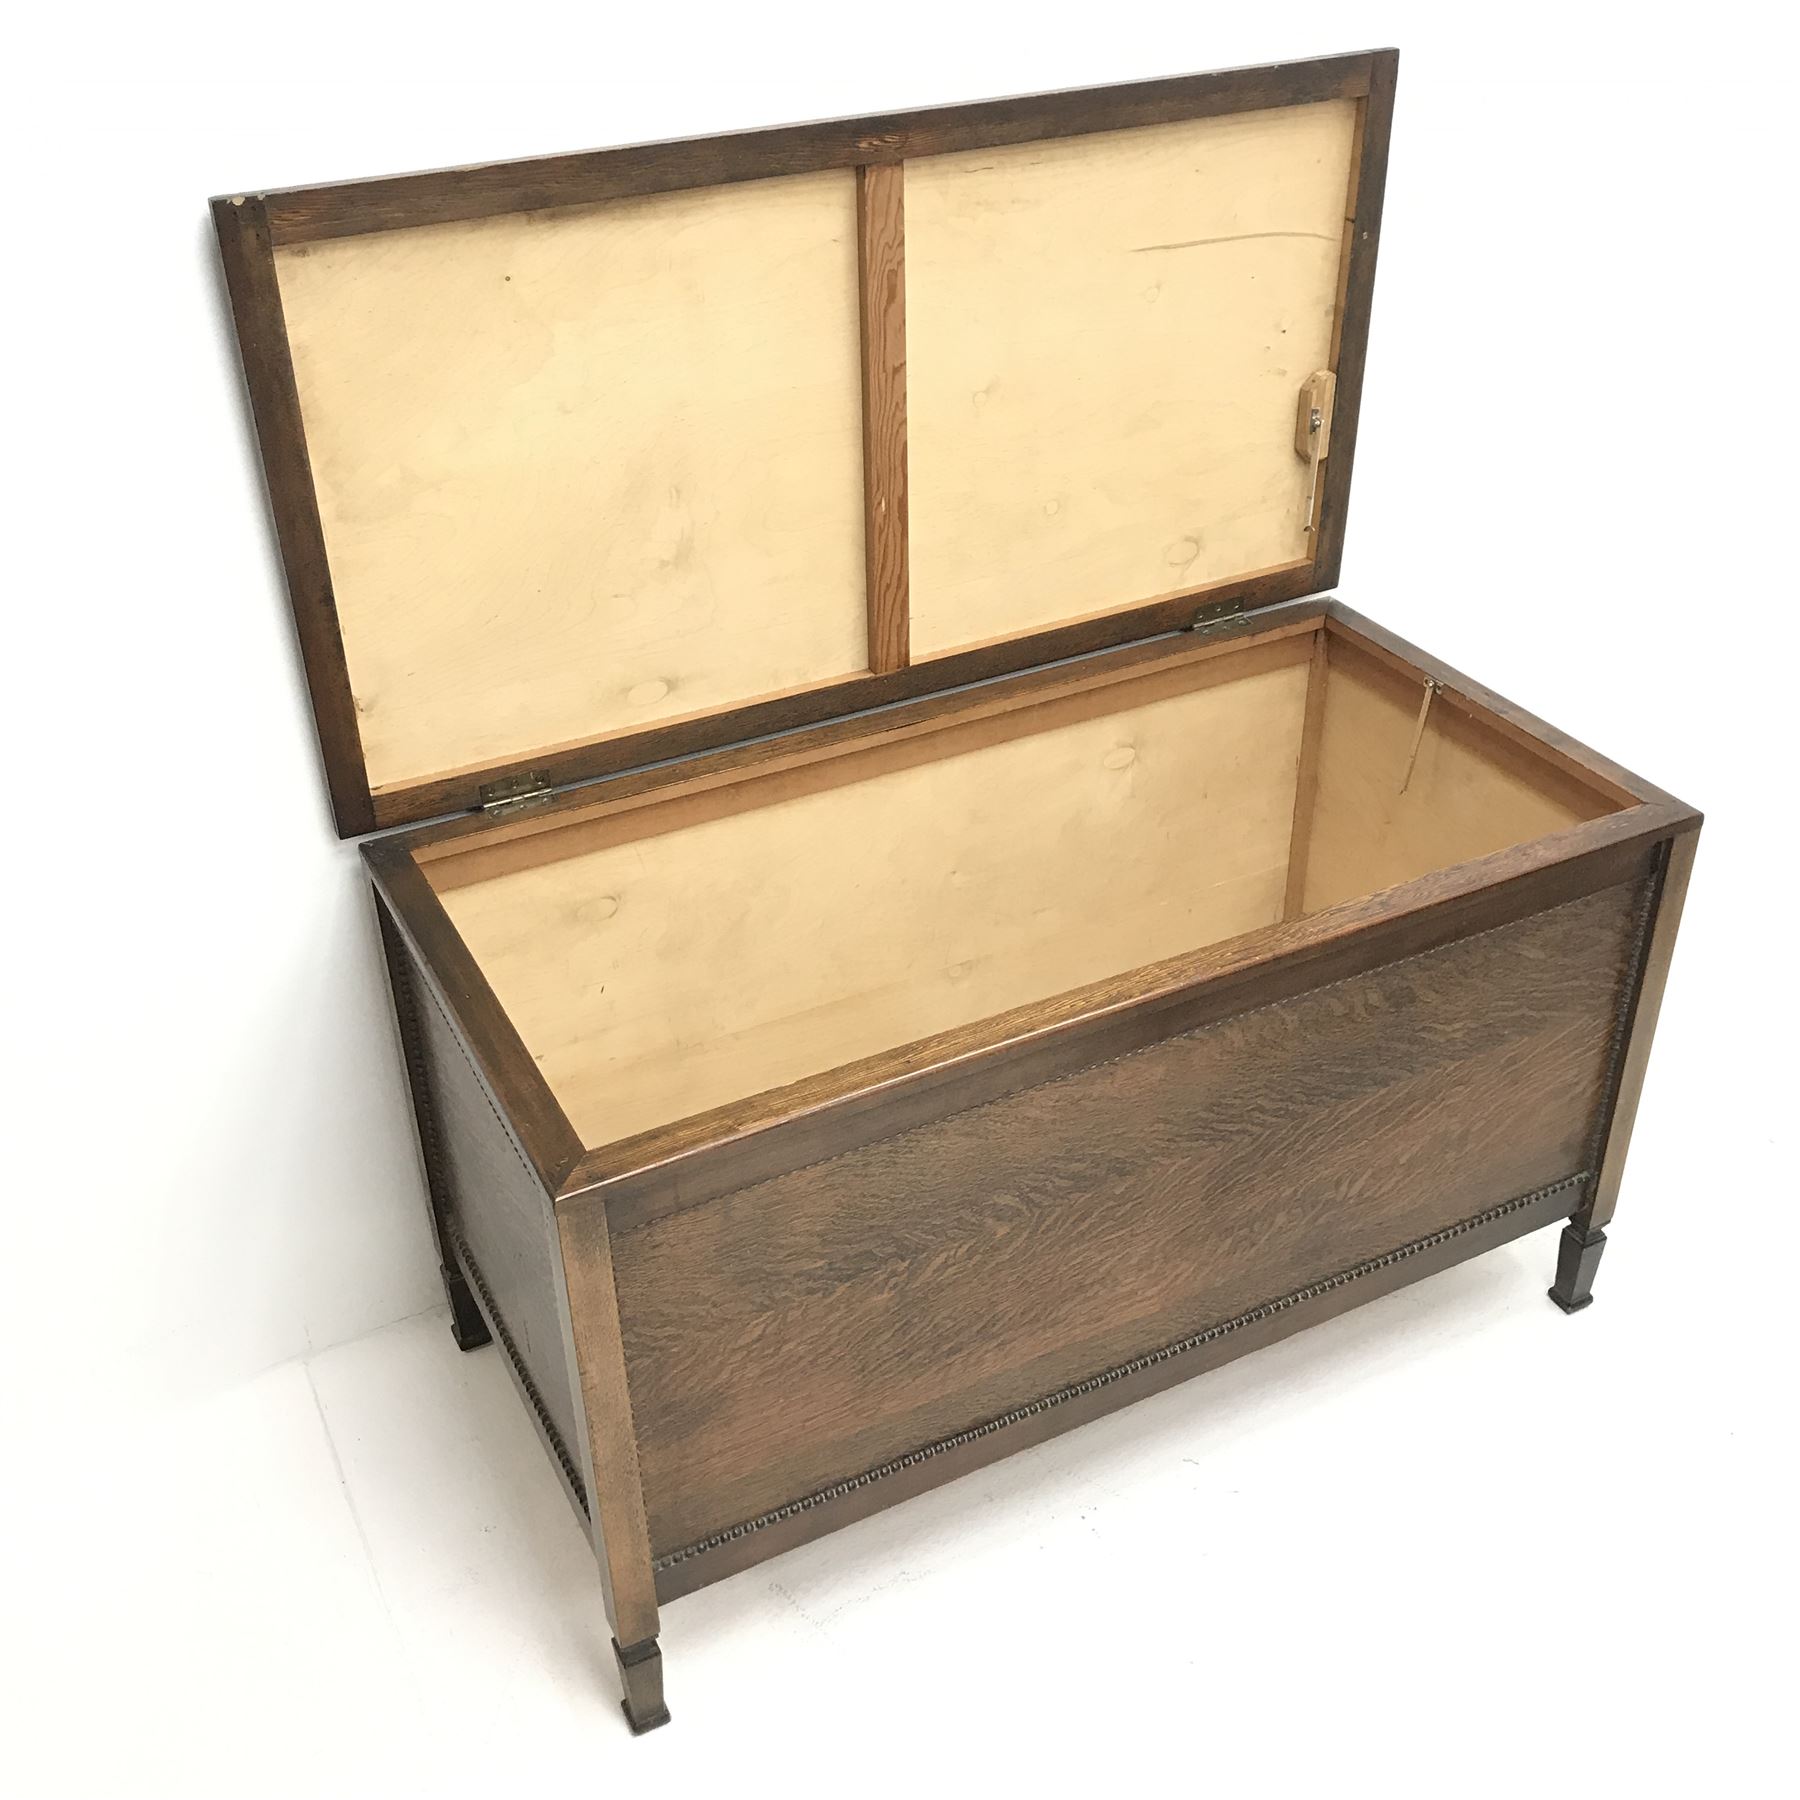 Early 20th century oak blanket box, single hinged lid, W110cm, H63cm, D55cm - Image 5 of 5